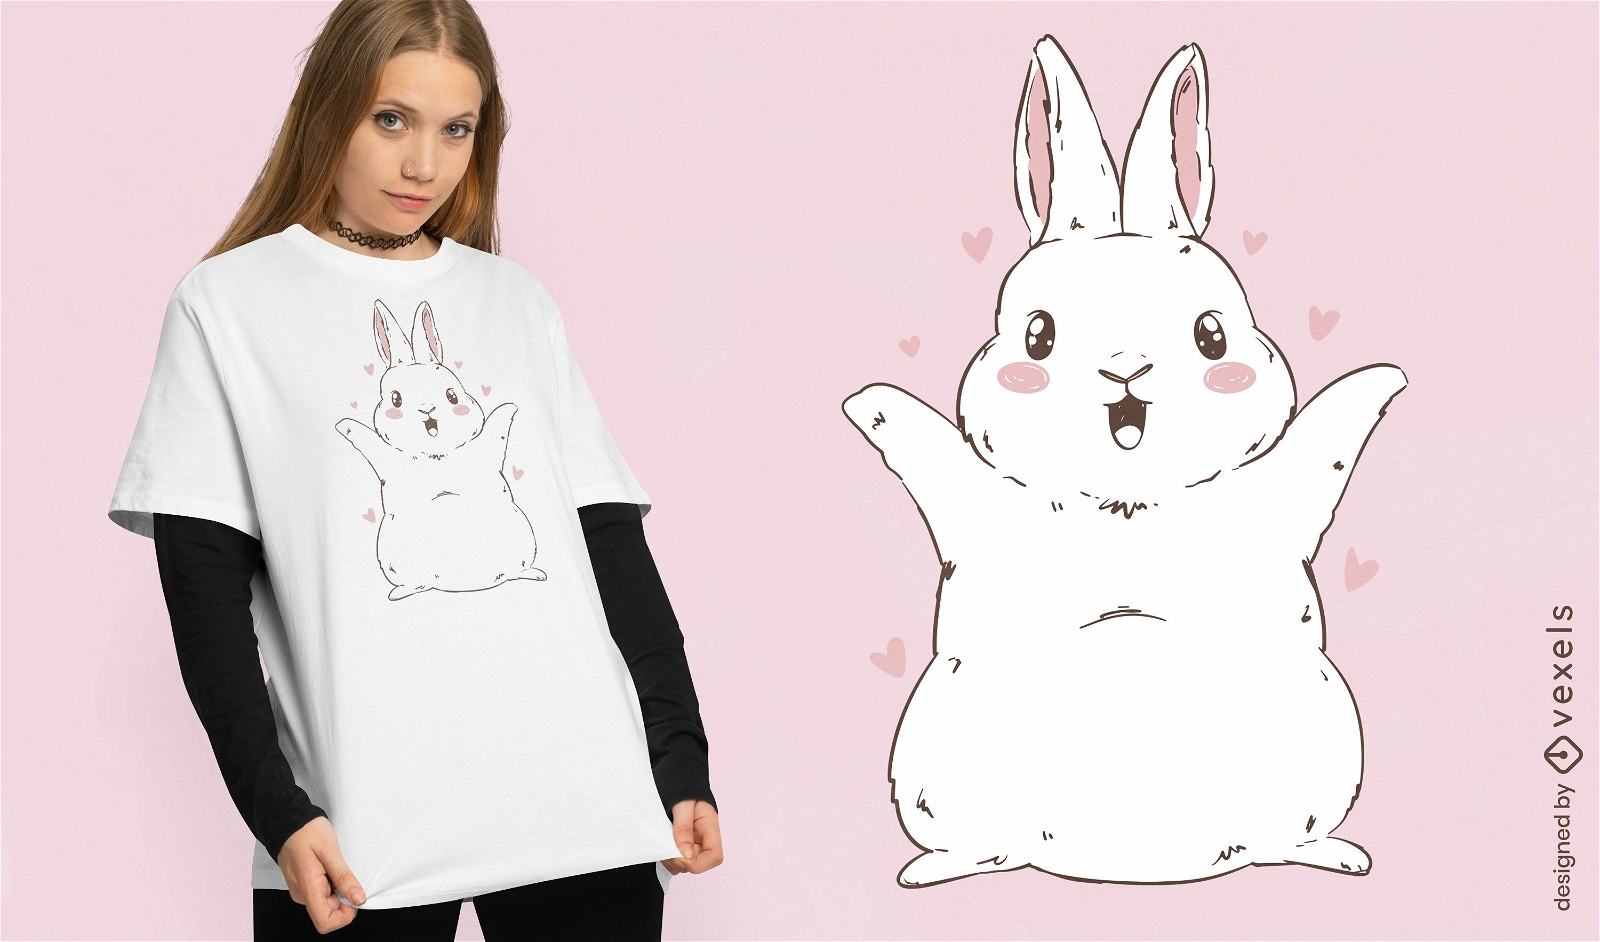 Adorable happy bunny t-shirt design